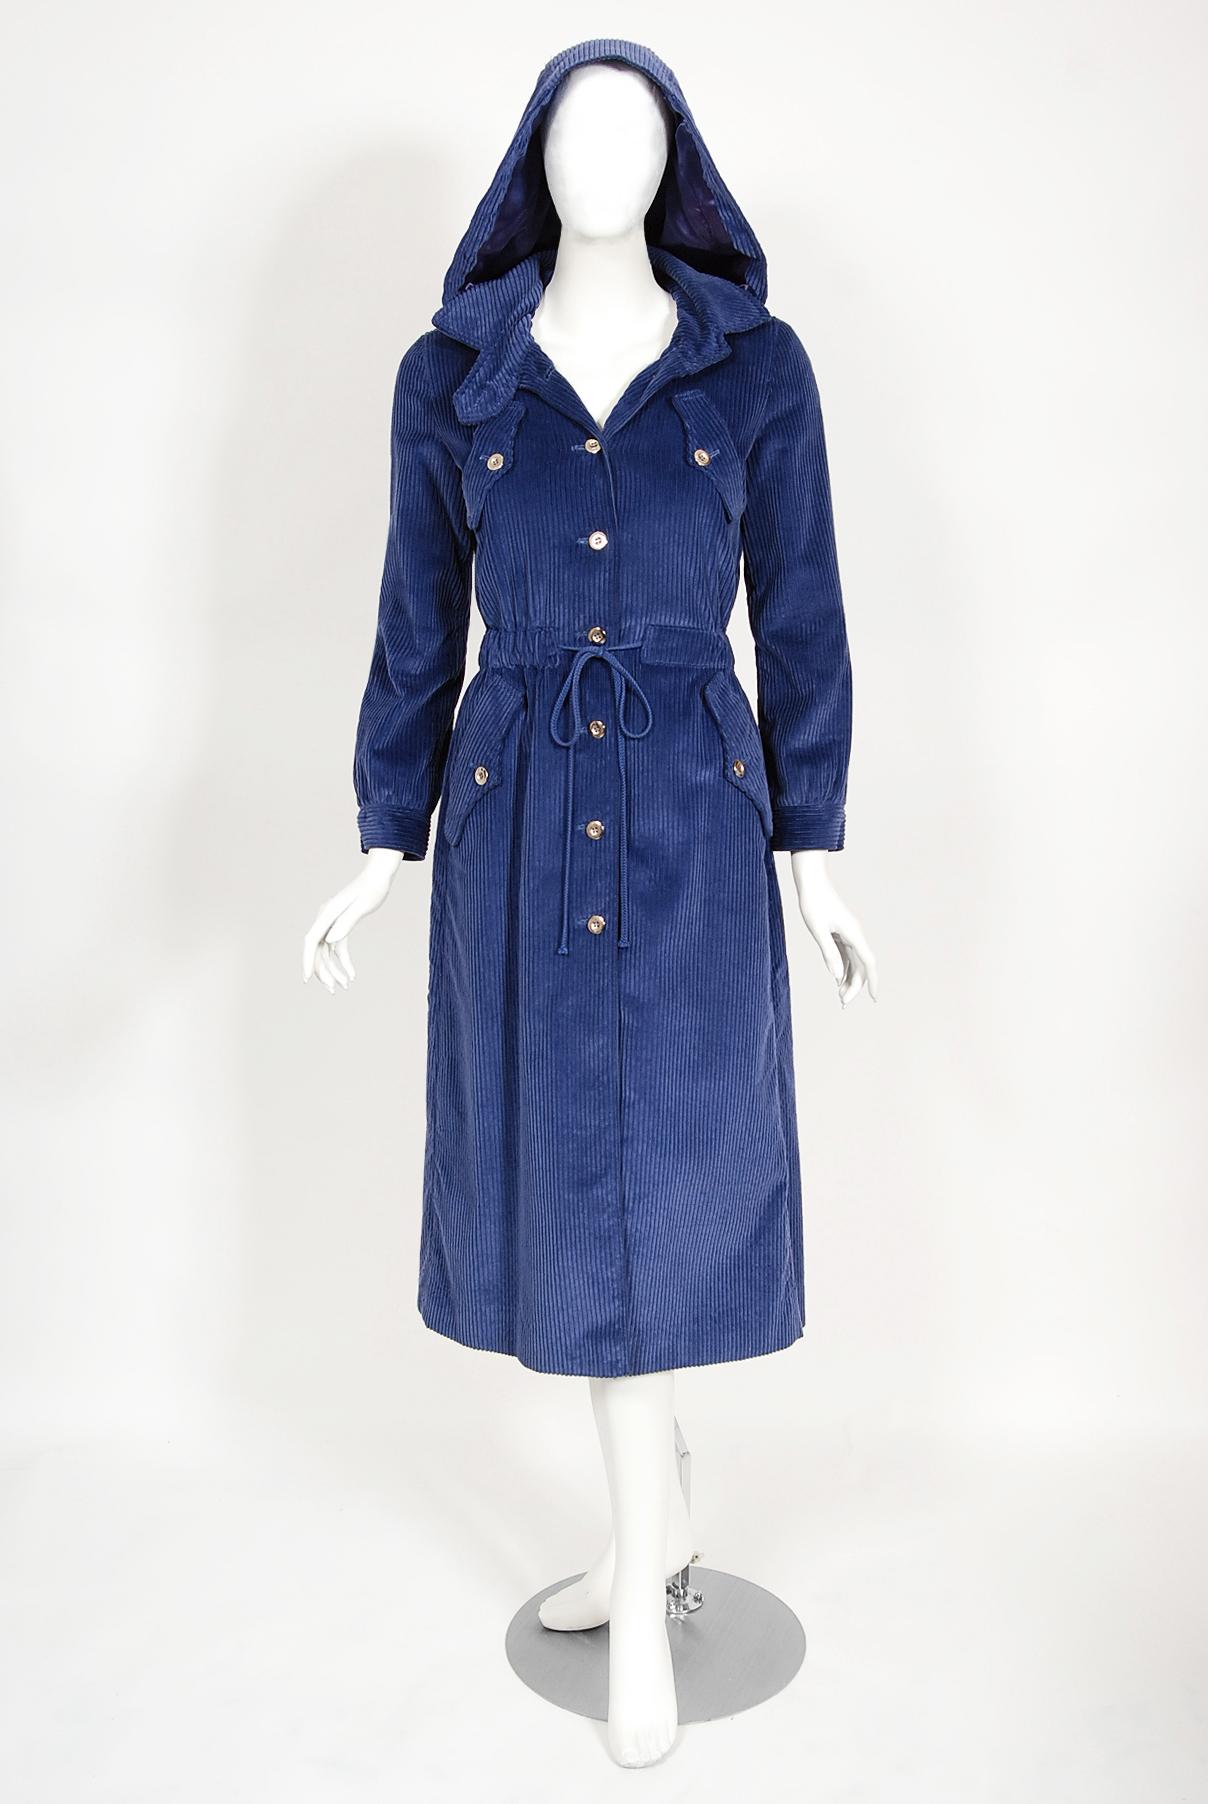 Vintage 1970s Courrèges Navy Blue Corduroy Waist-Tie Detachable Hood Jacket Coat In Good Condition For Sale In Beverly Hills, CA